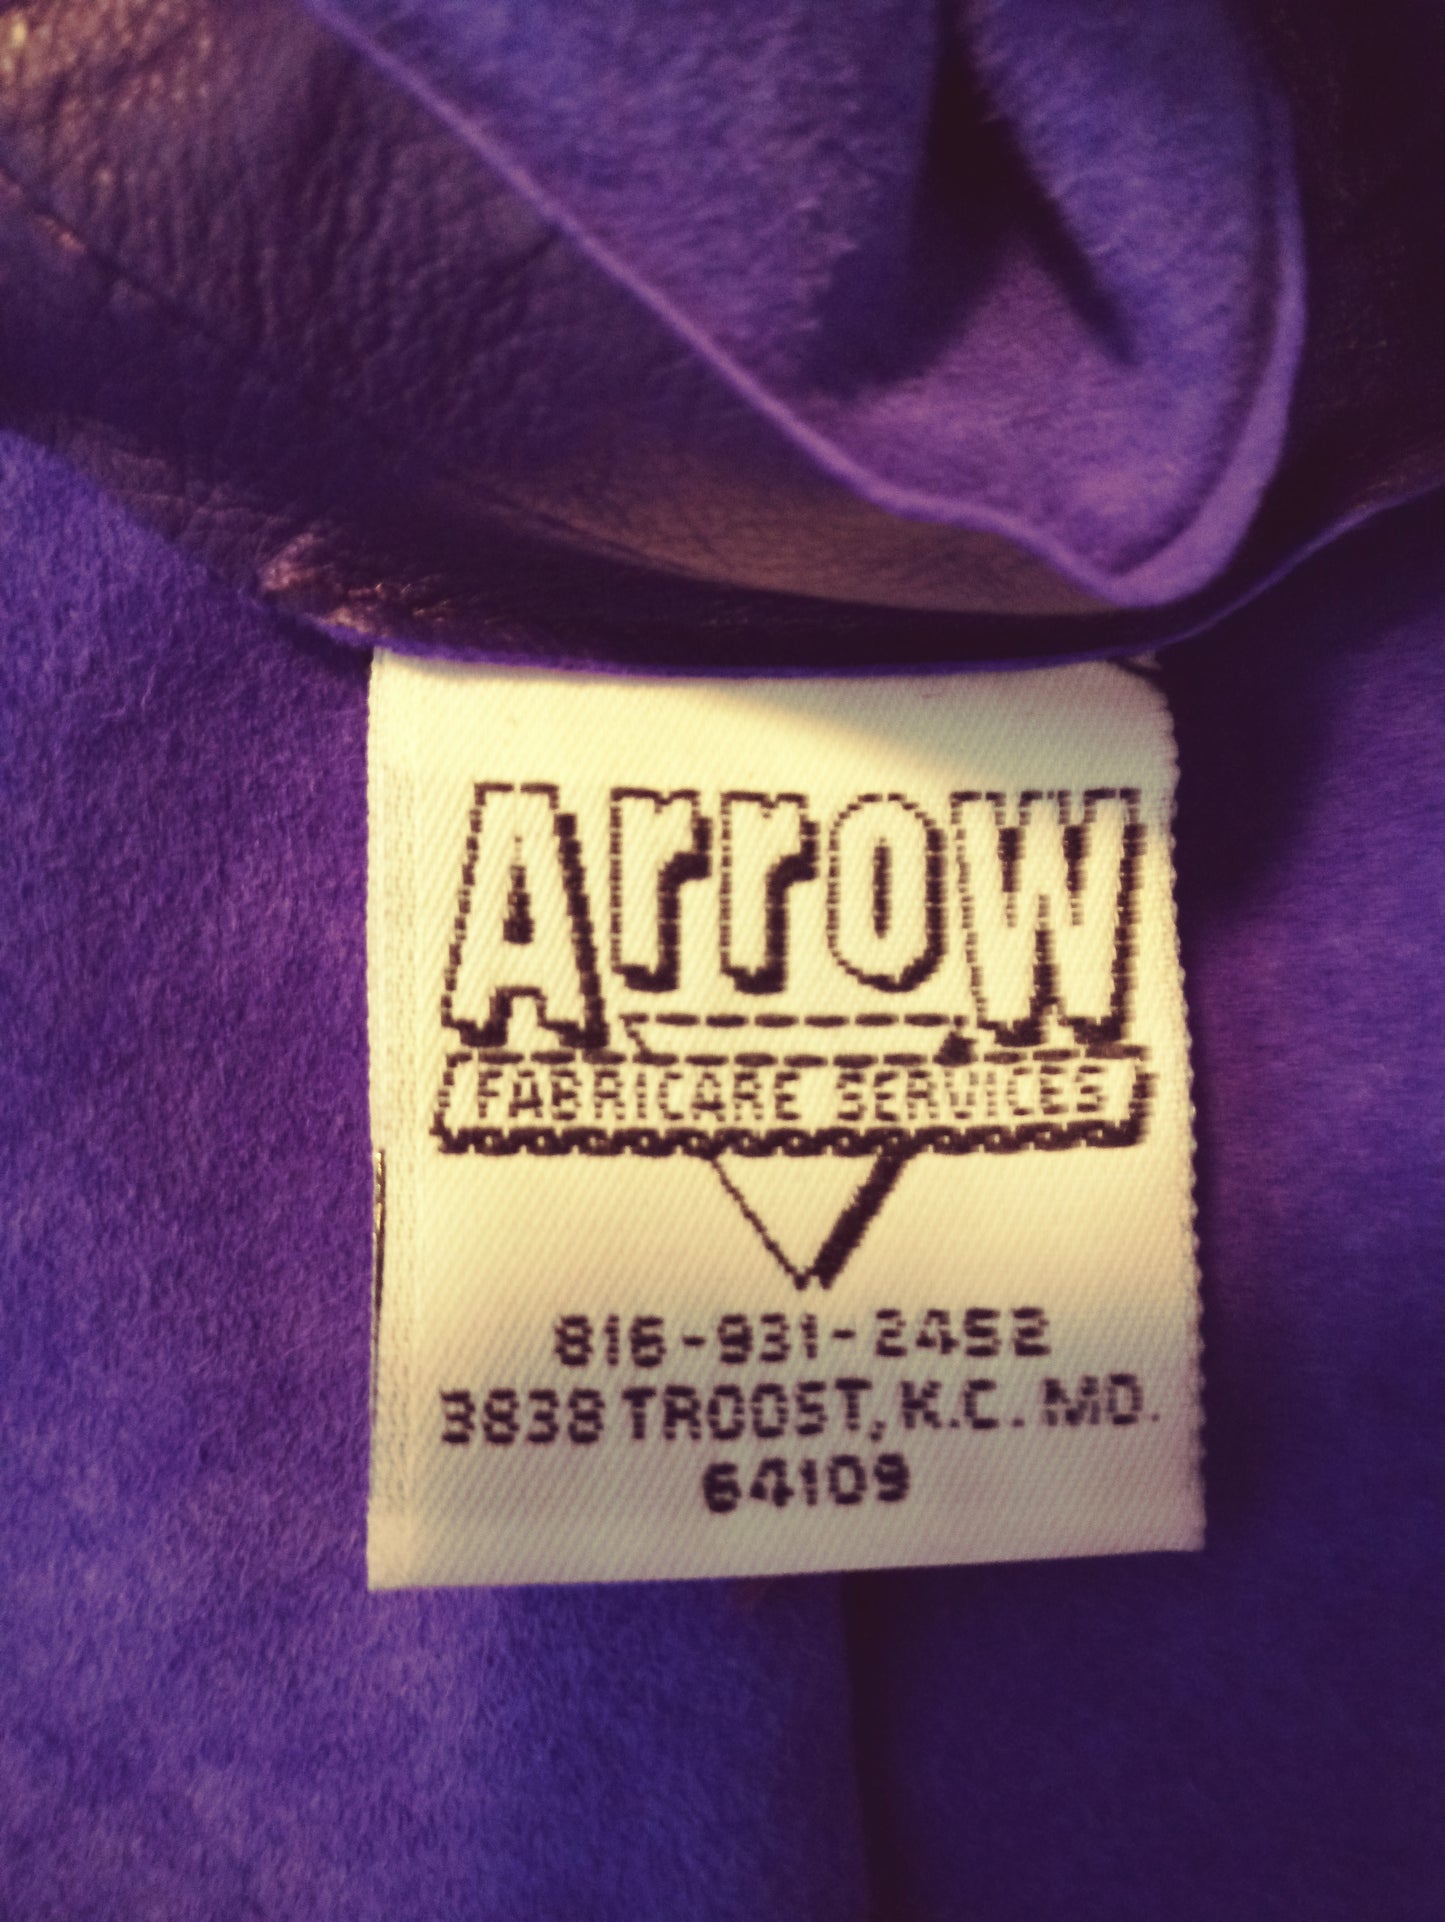 In Transit Leather Skirt Purple Size L (SKU 000266-7)